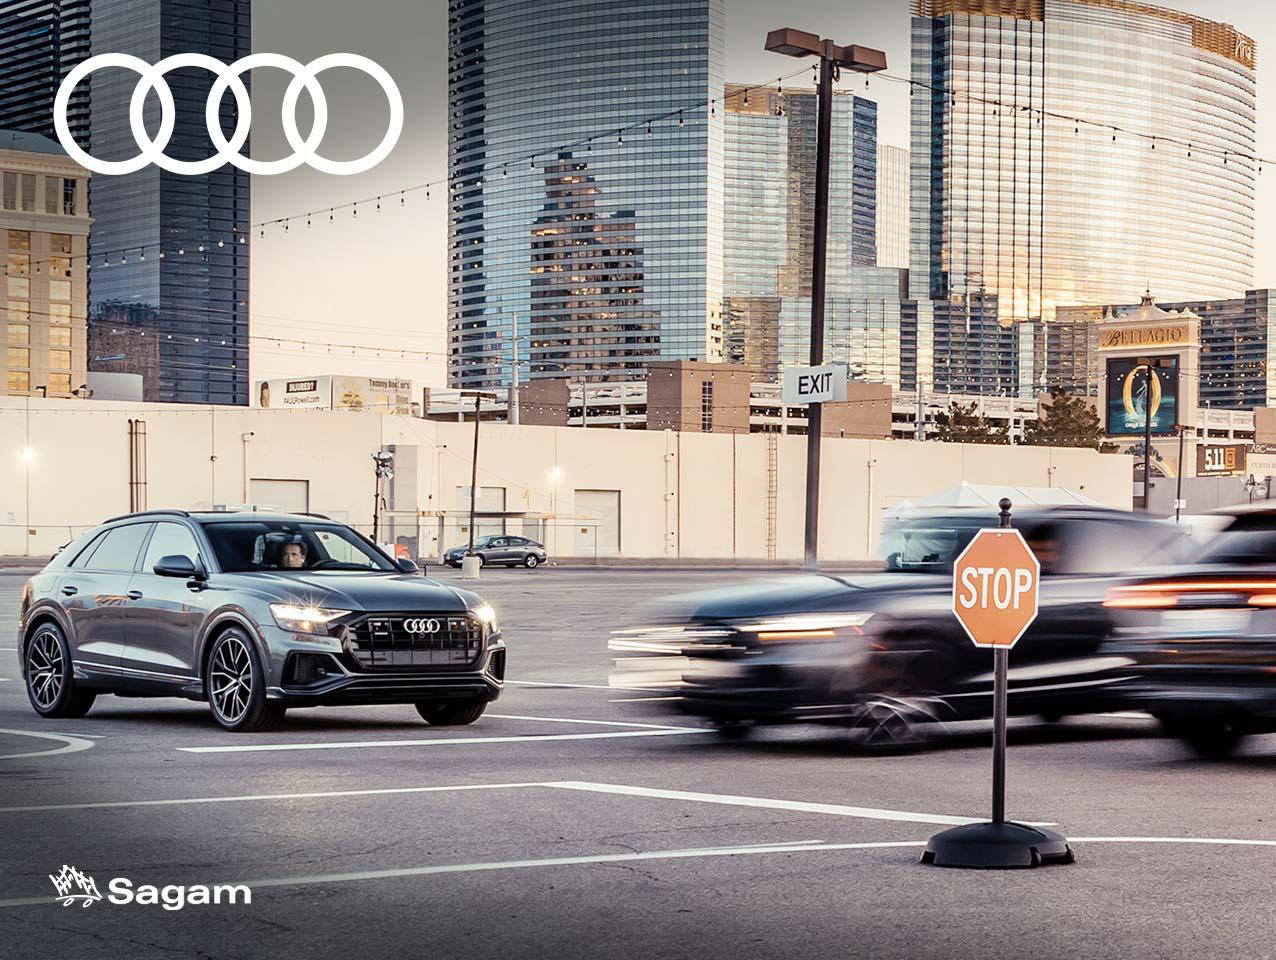 Guida autonoma: test su strada per i Suv Audi